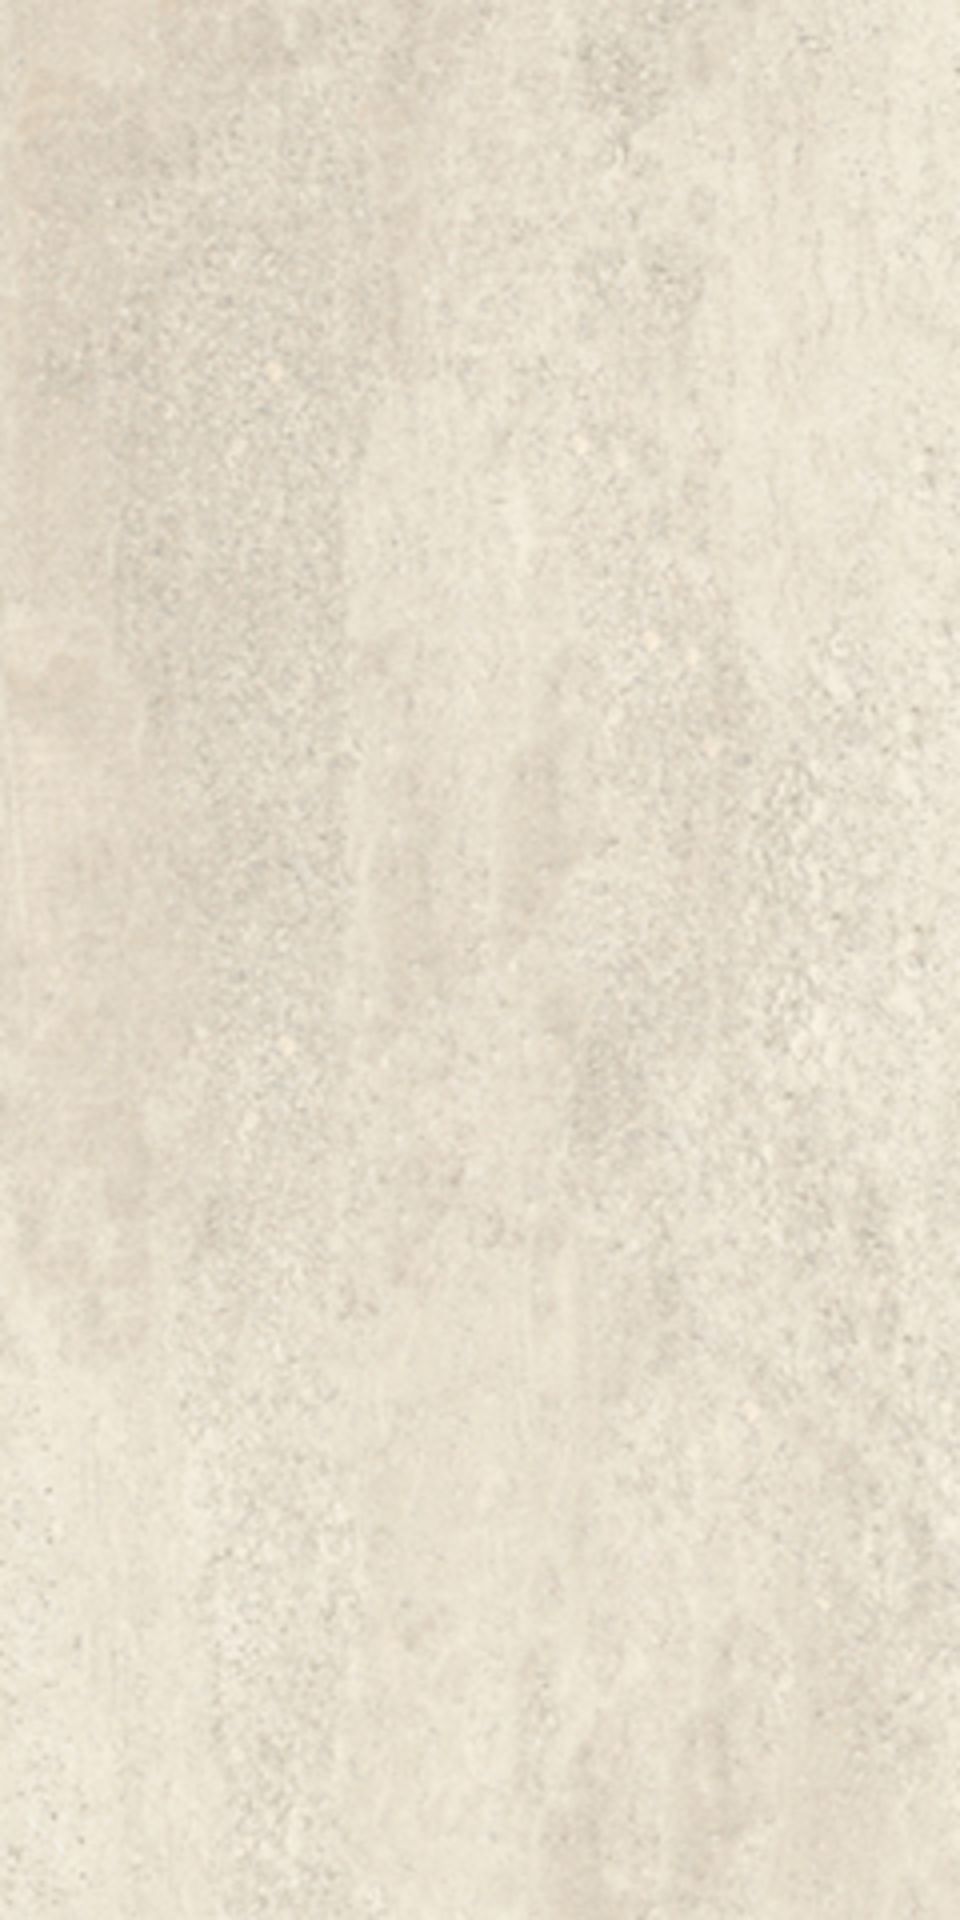 A pallet of 12x packs of 10 Johnsons Tiles 360x275mm Grassmere slate grey matt wall and floor tiles, - Image 2 of 2